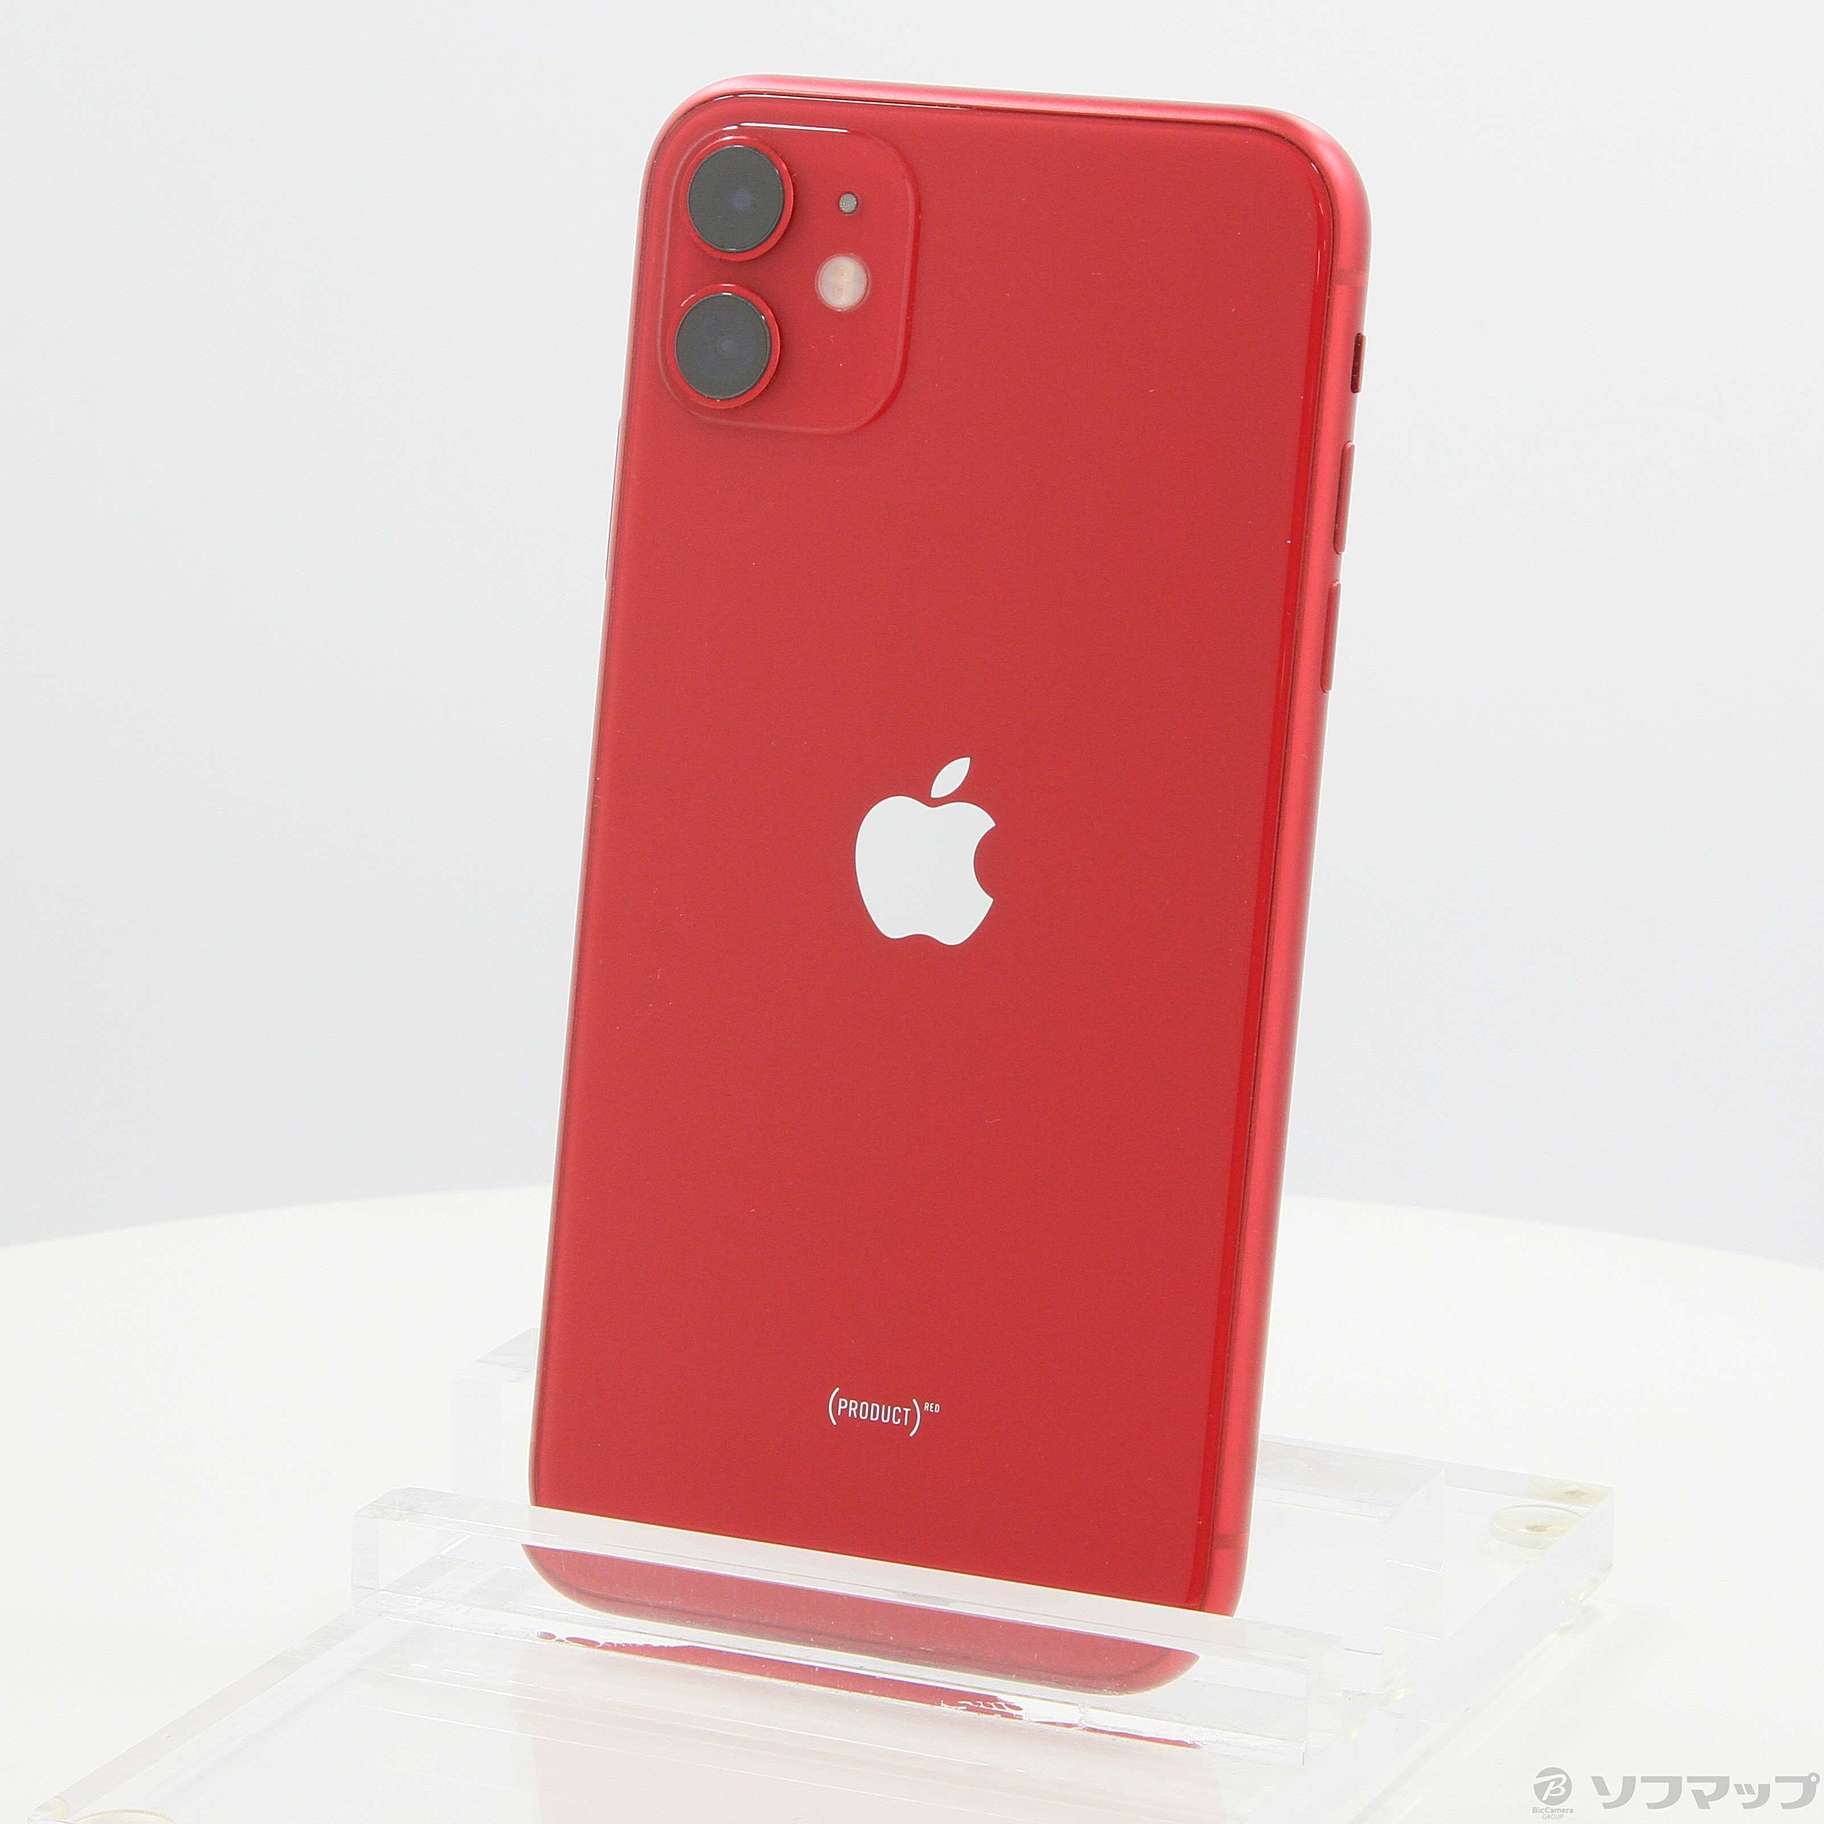 iPhone 11 (PRODUCT)RED 128GB SIMフリー [レッド] 中古(白ロム